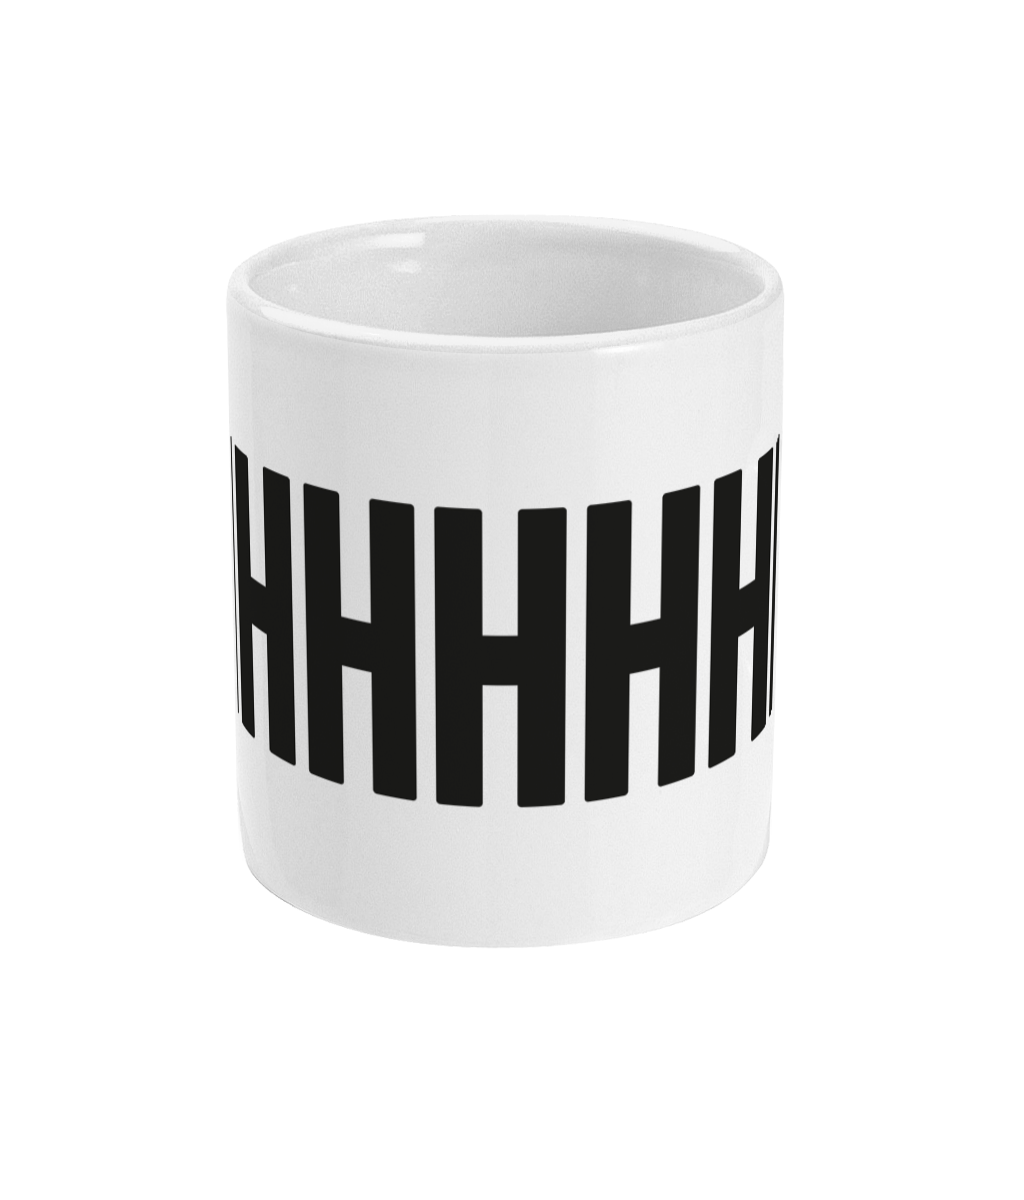 Funny mug / cup reads Shhhh.